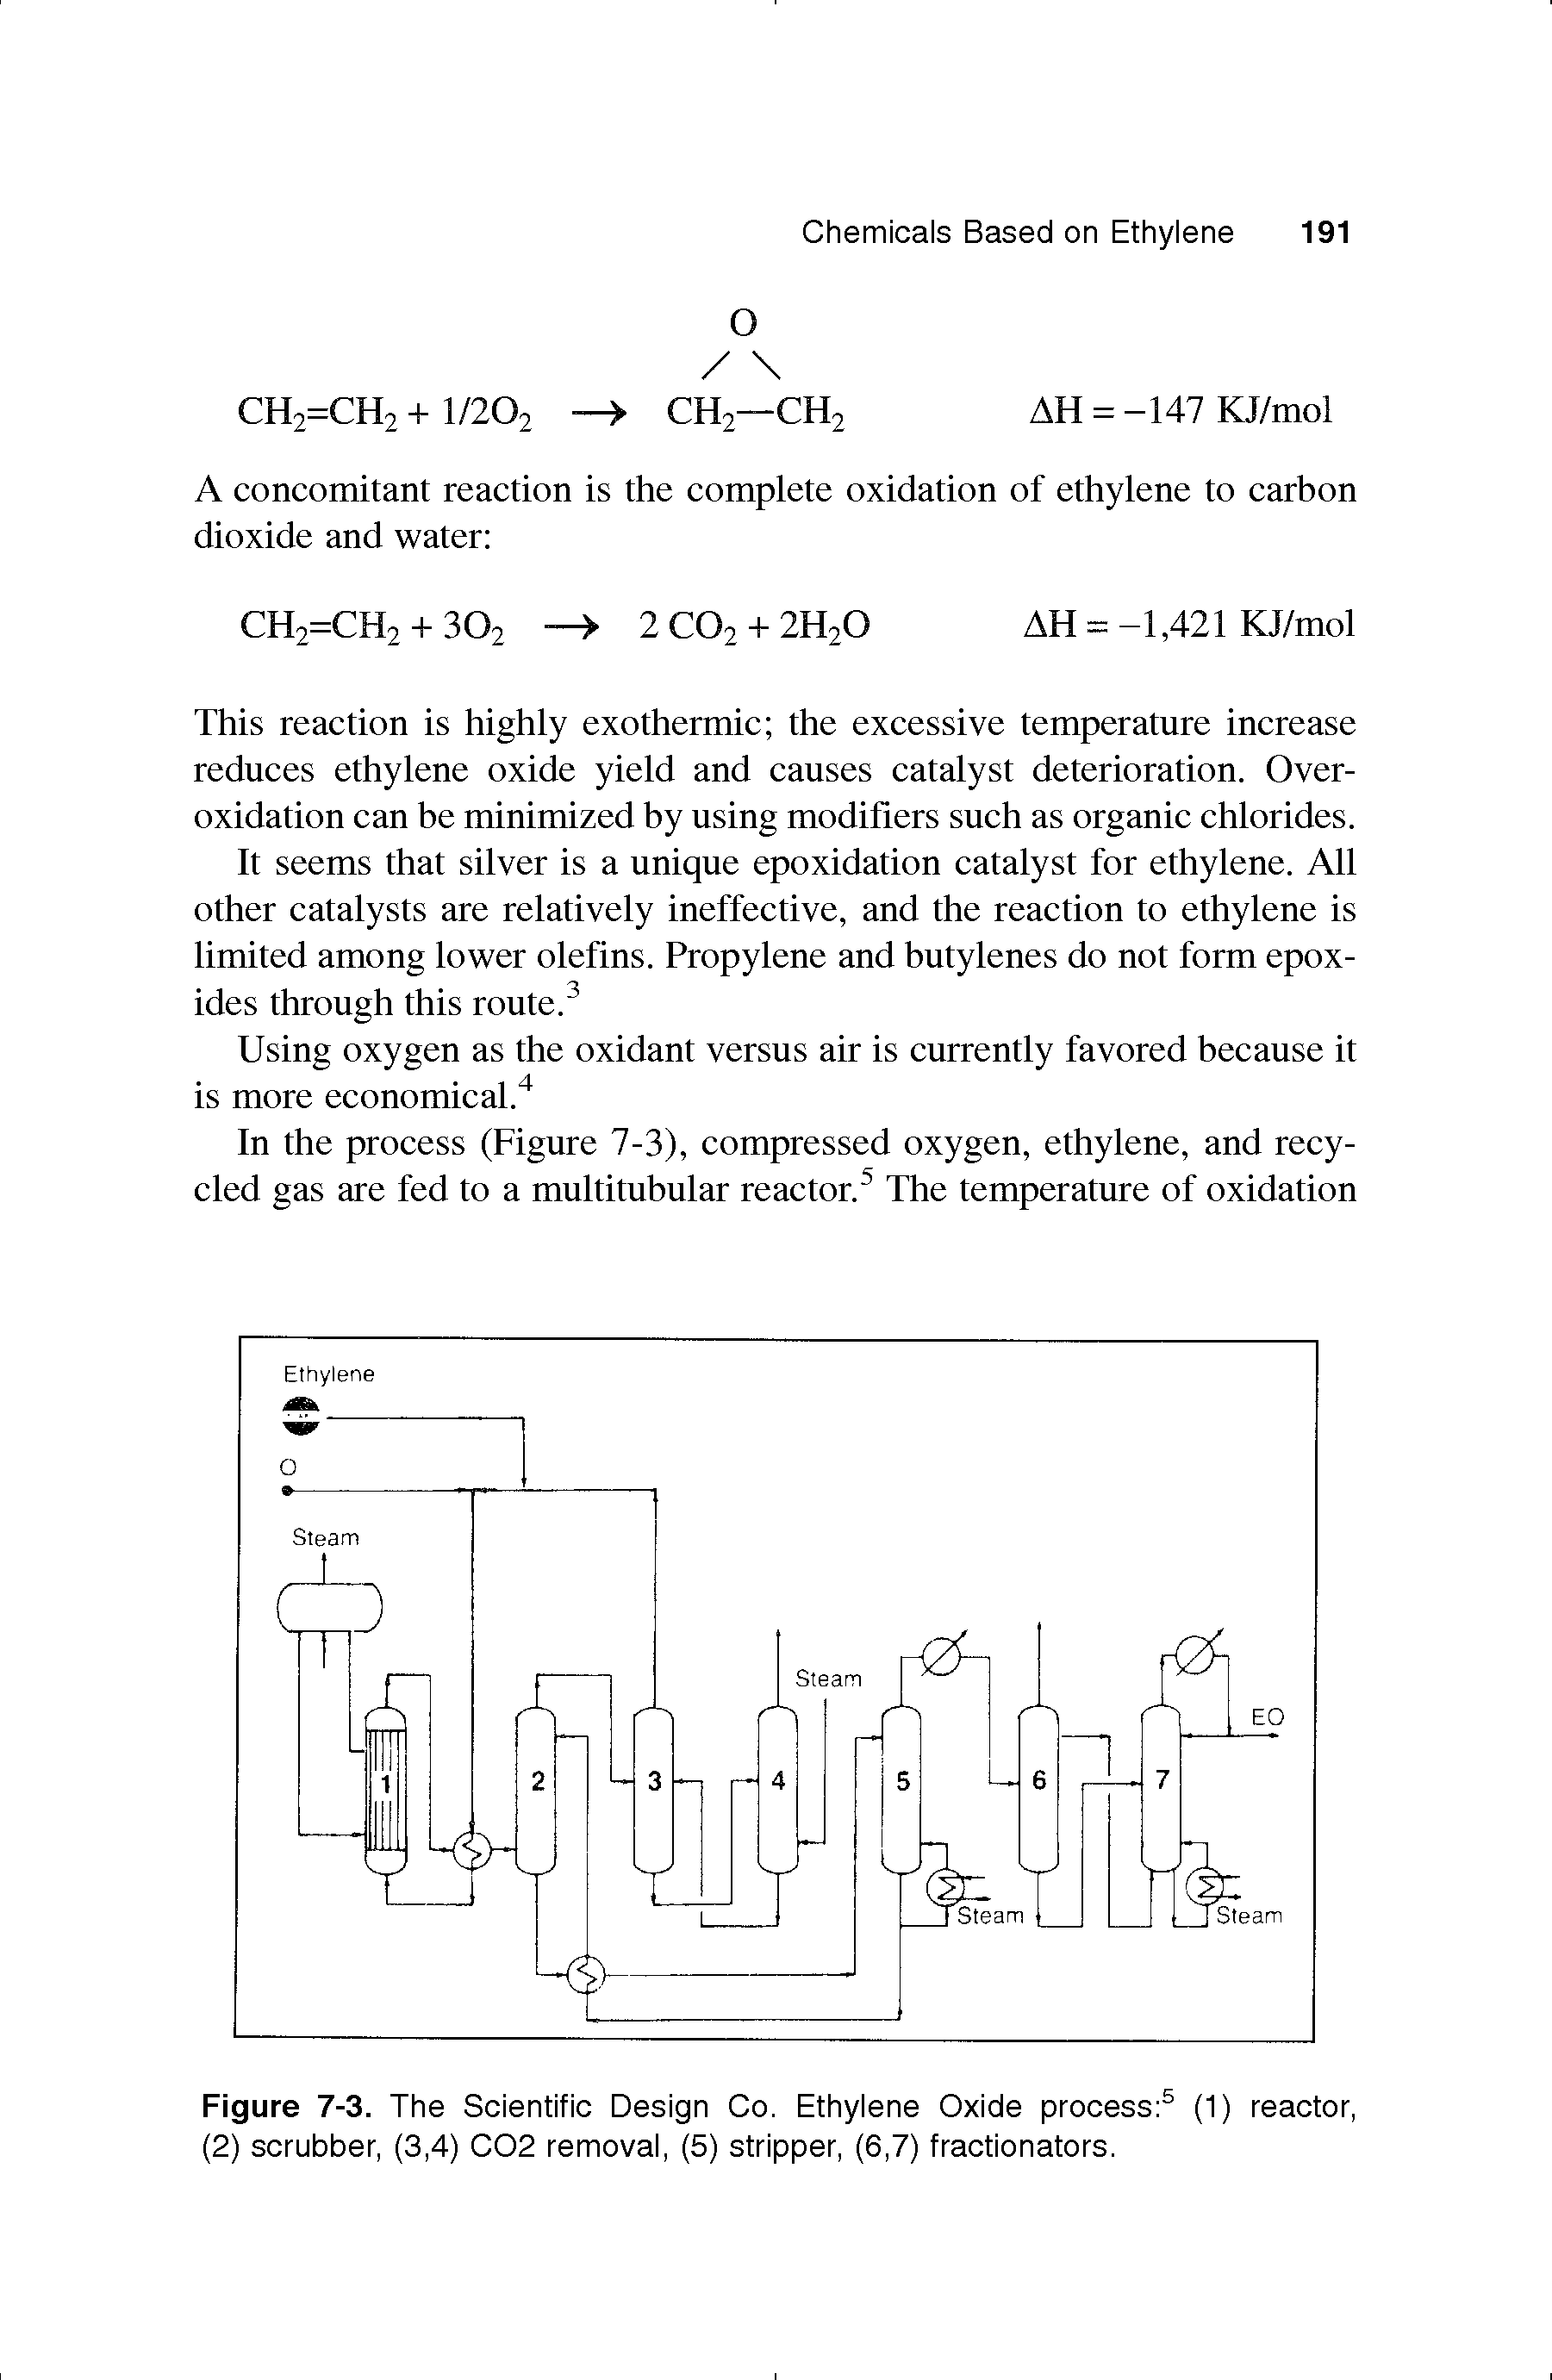 Figure 7-3. The Scientific Design Co. Ethylene Oxide process (1) reactor, (2) scrubber, (3,4) C02 removal, (5) stripper, (6,7) fractionators.